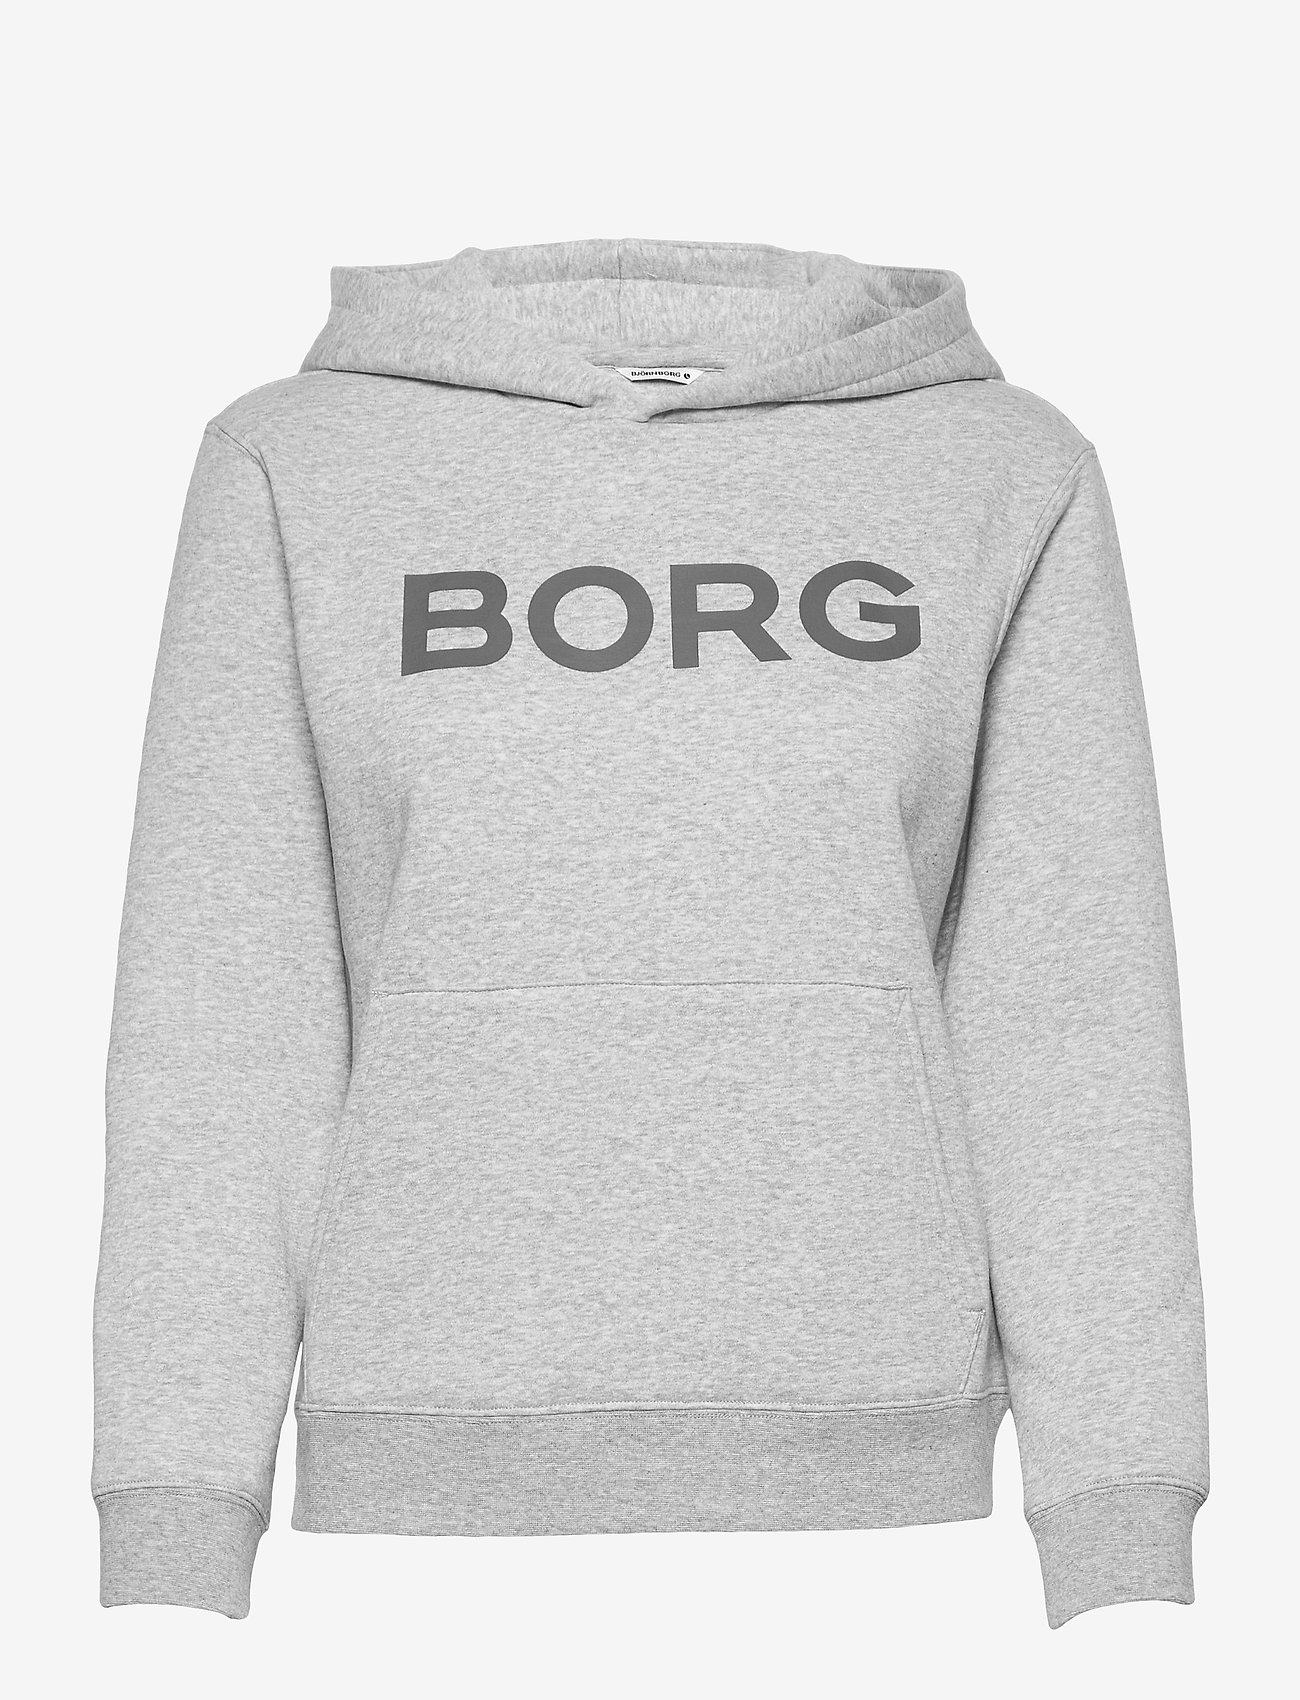 Björn Borg - HOOD W BB LOGO W BB LOGO - hupparit - h108by light grey melange - 0